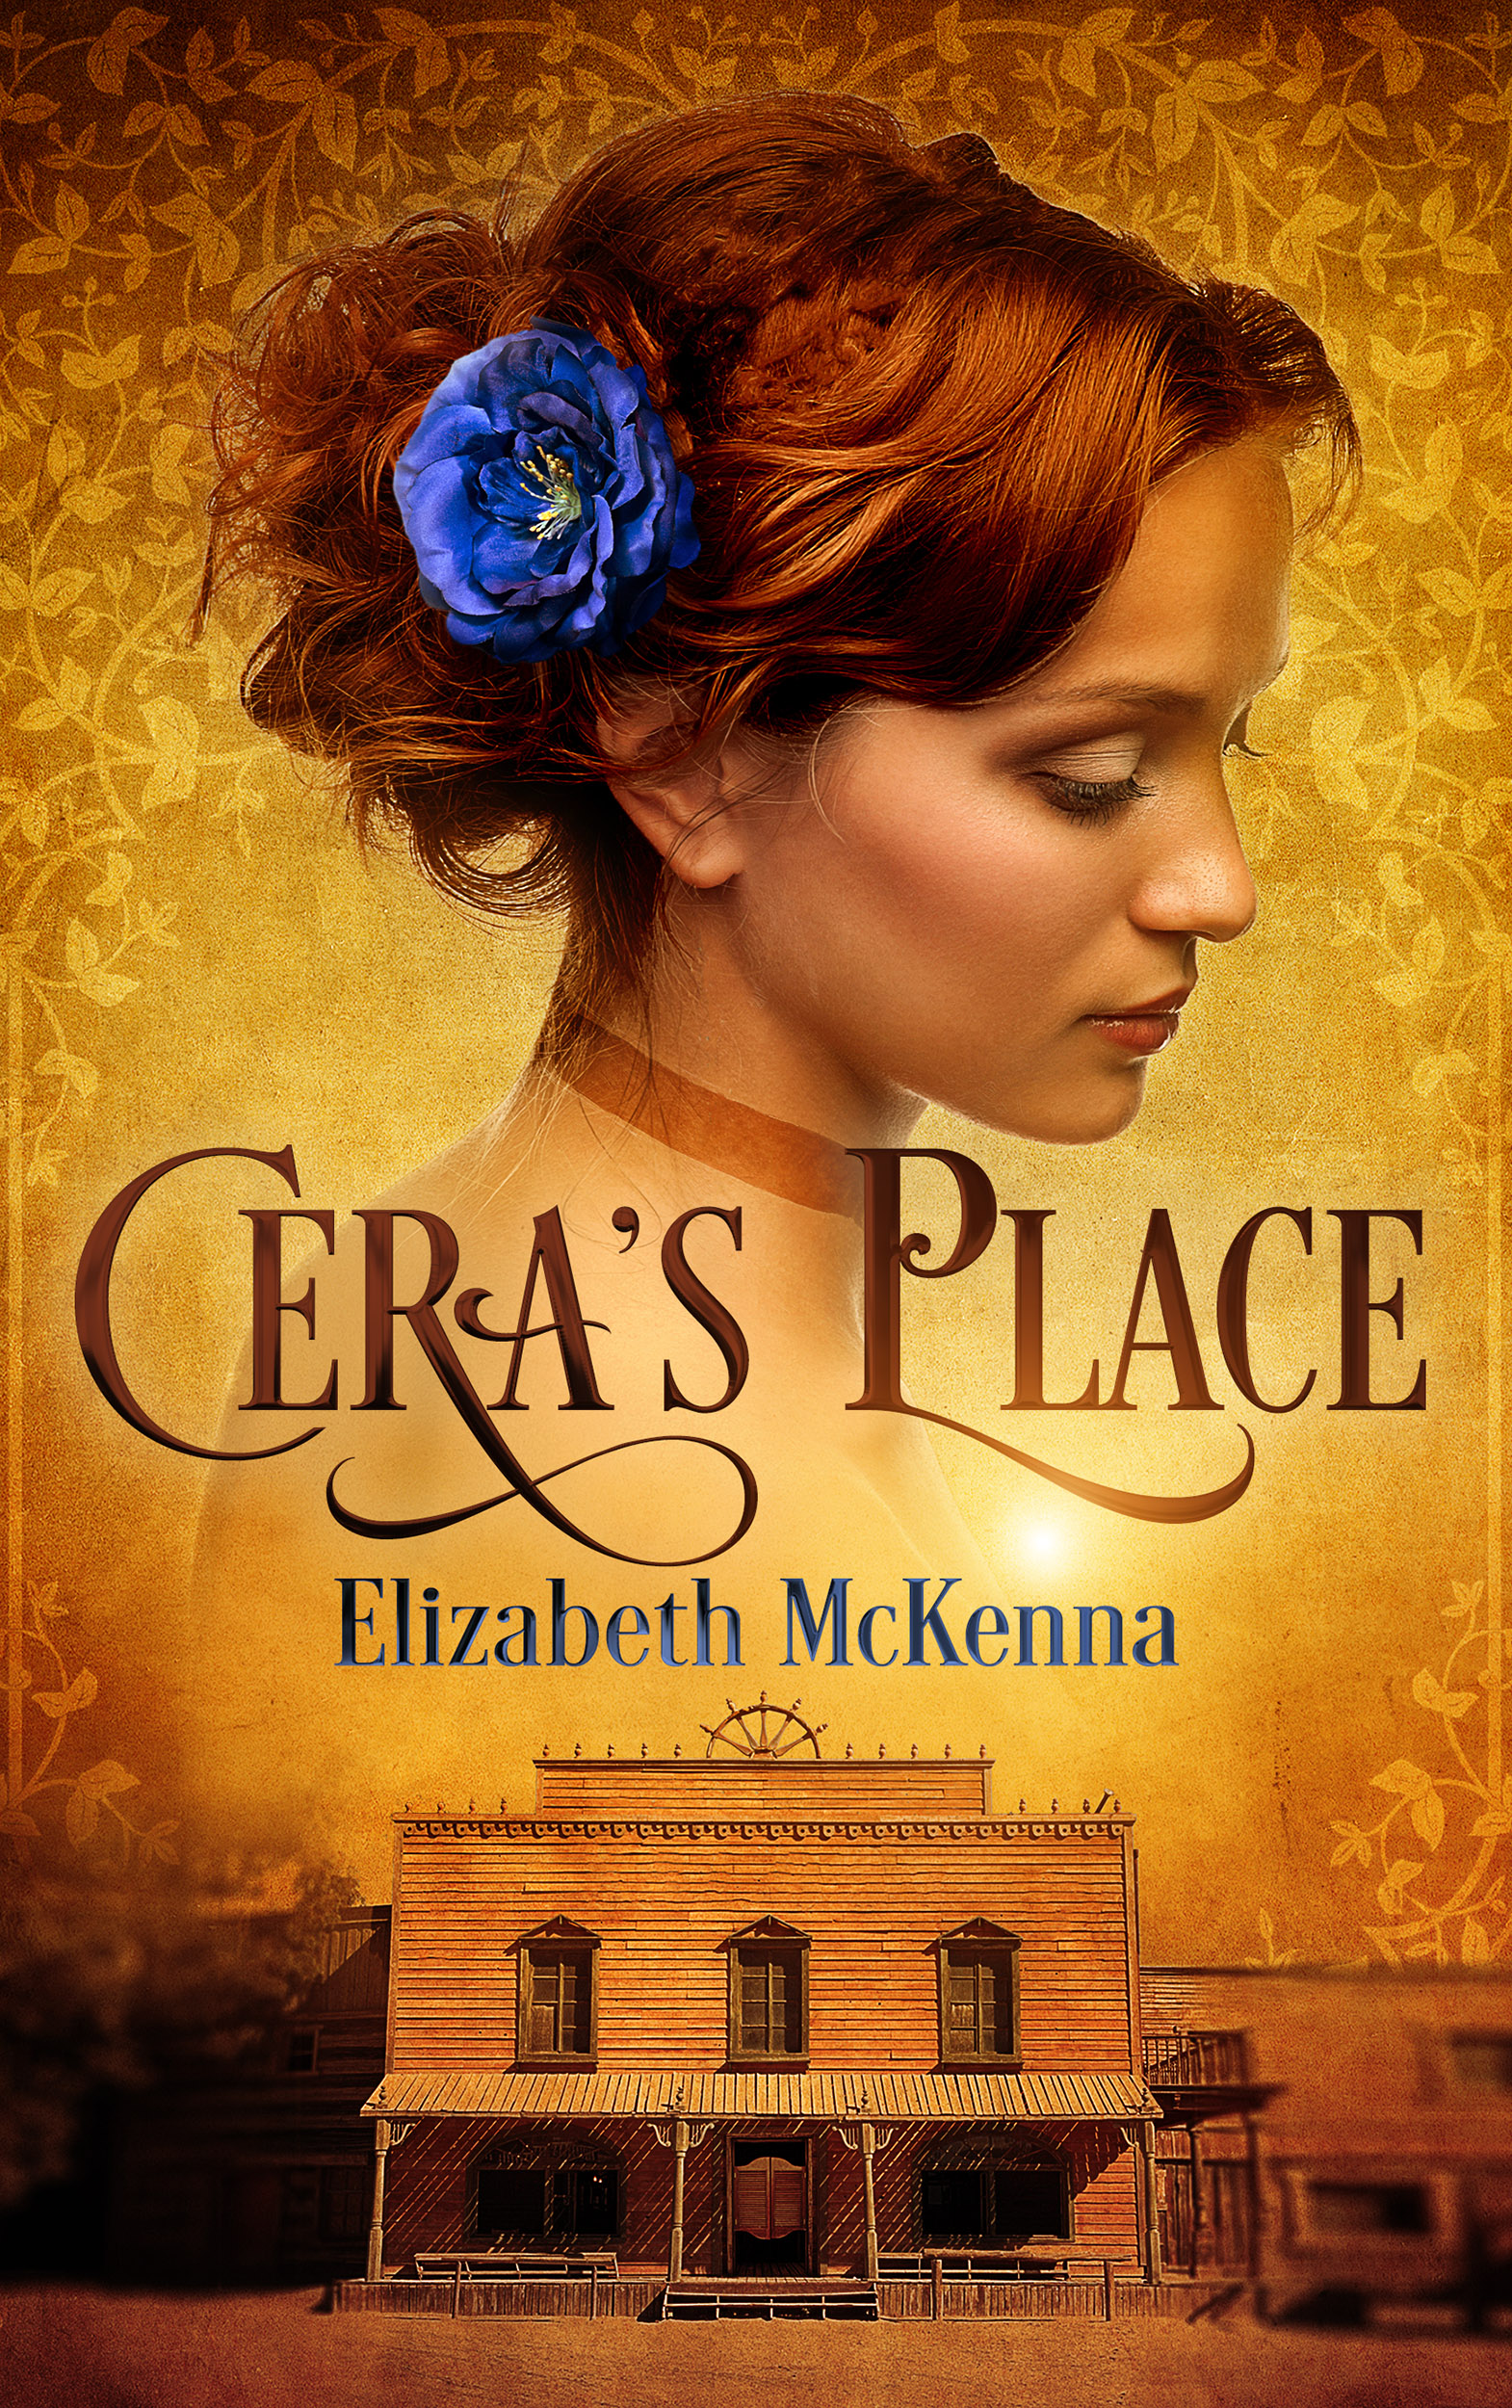 Cera's Place - Ebook Small